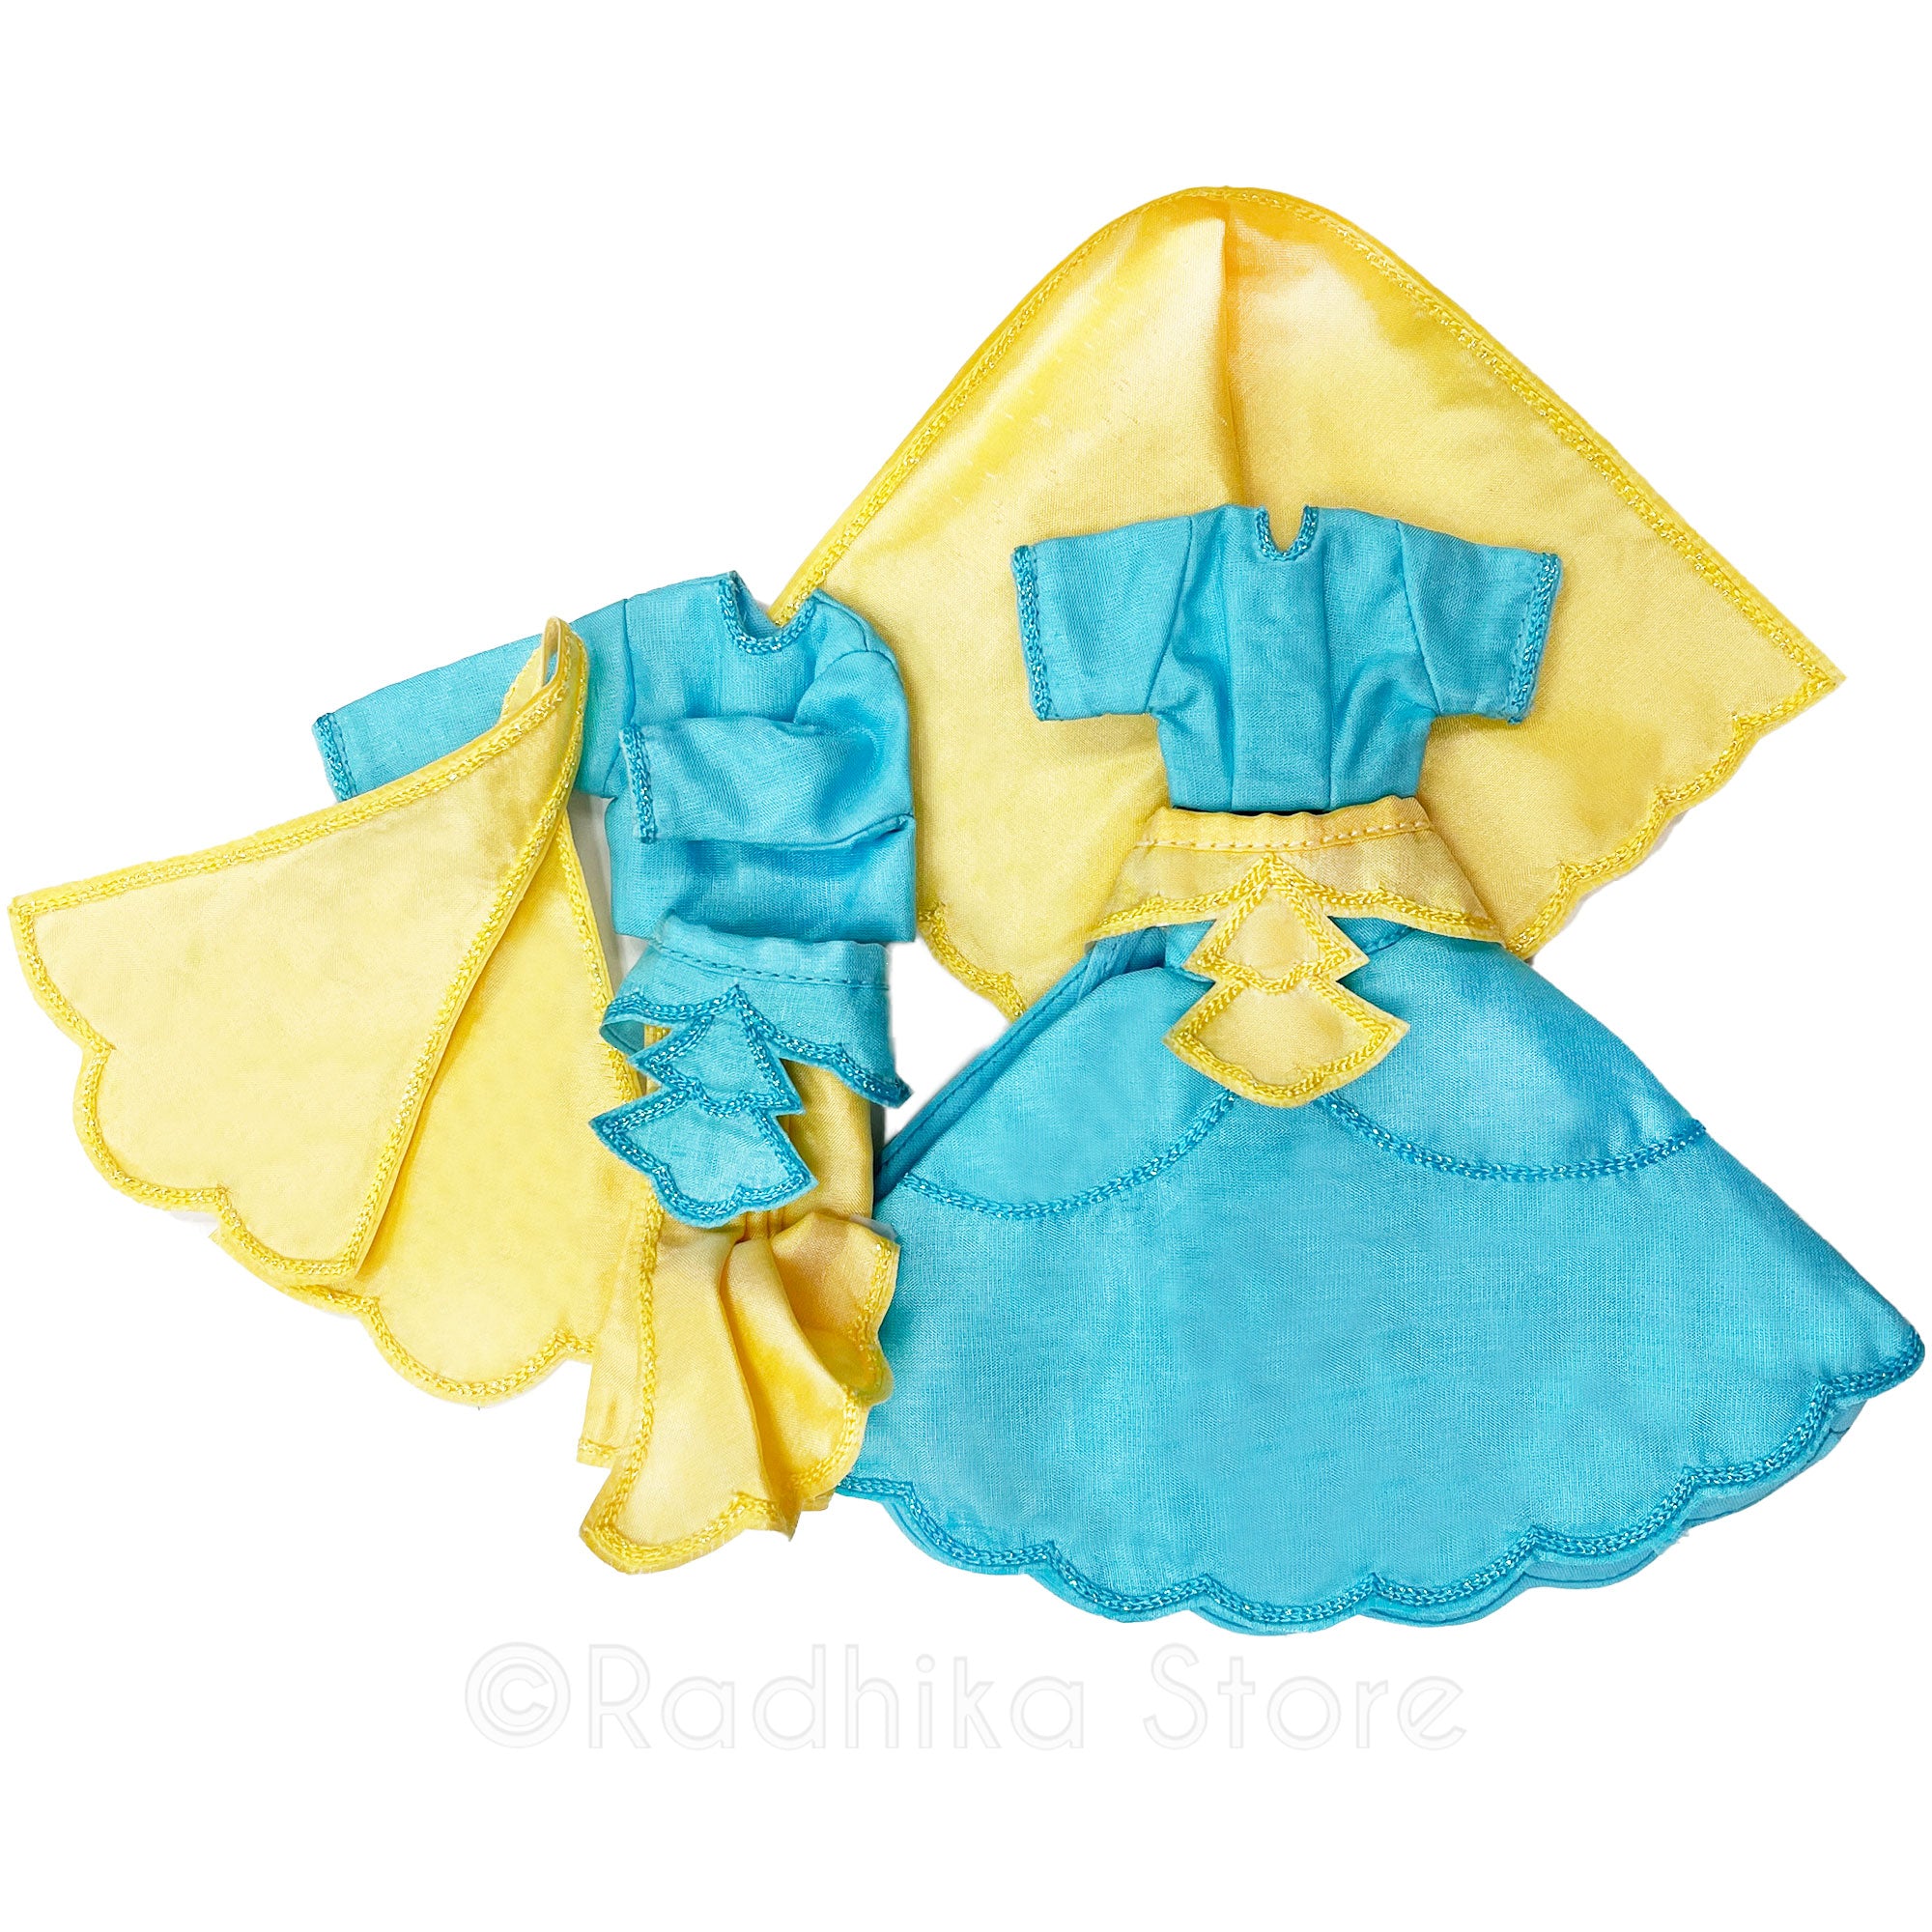 Blissful Moonbeam - Blue, Yellow Silk - Radha Krishna Deity Outfit